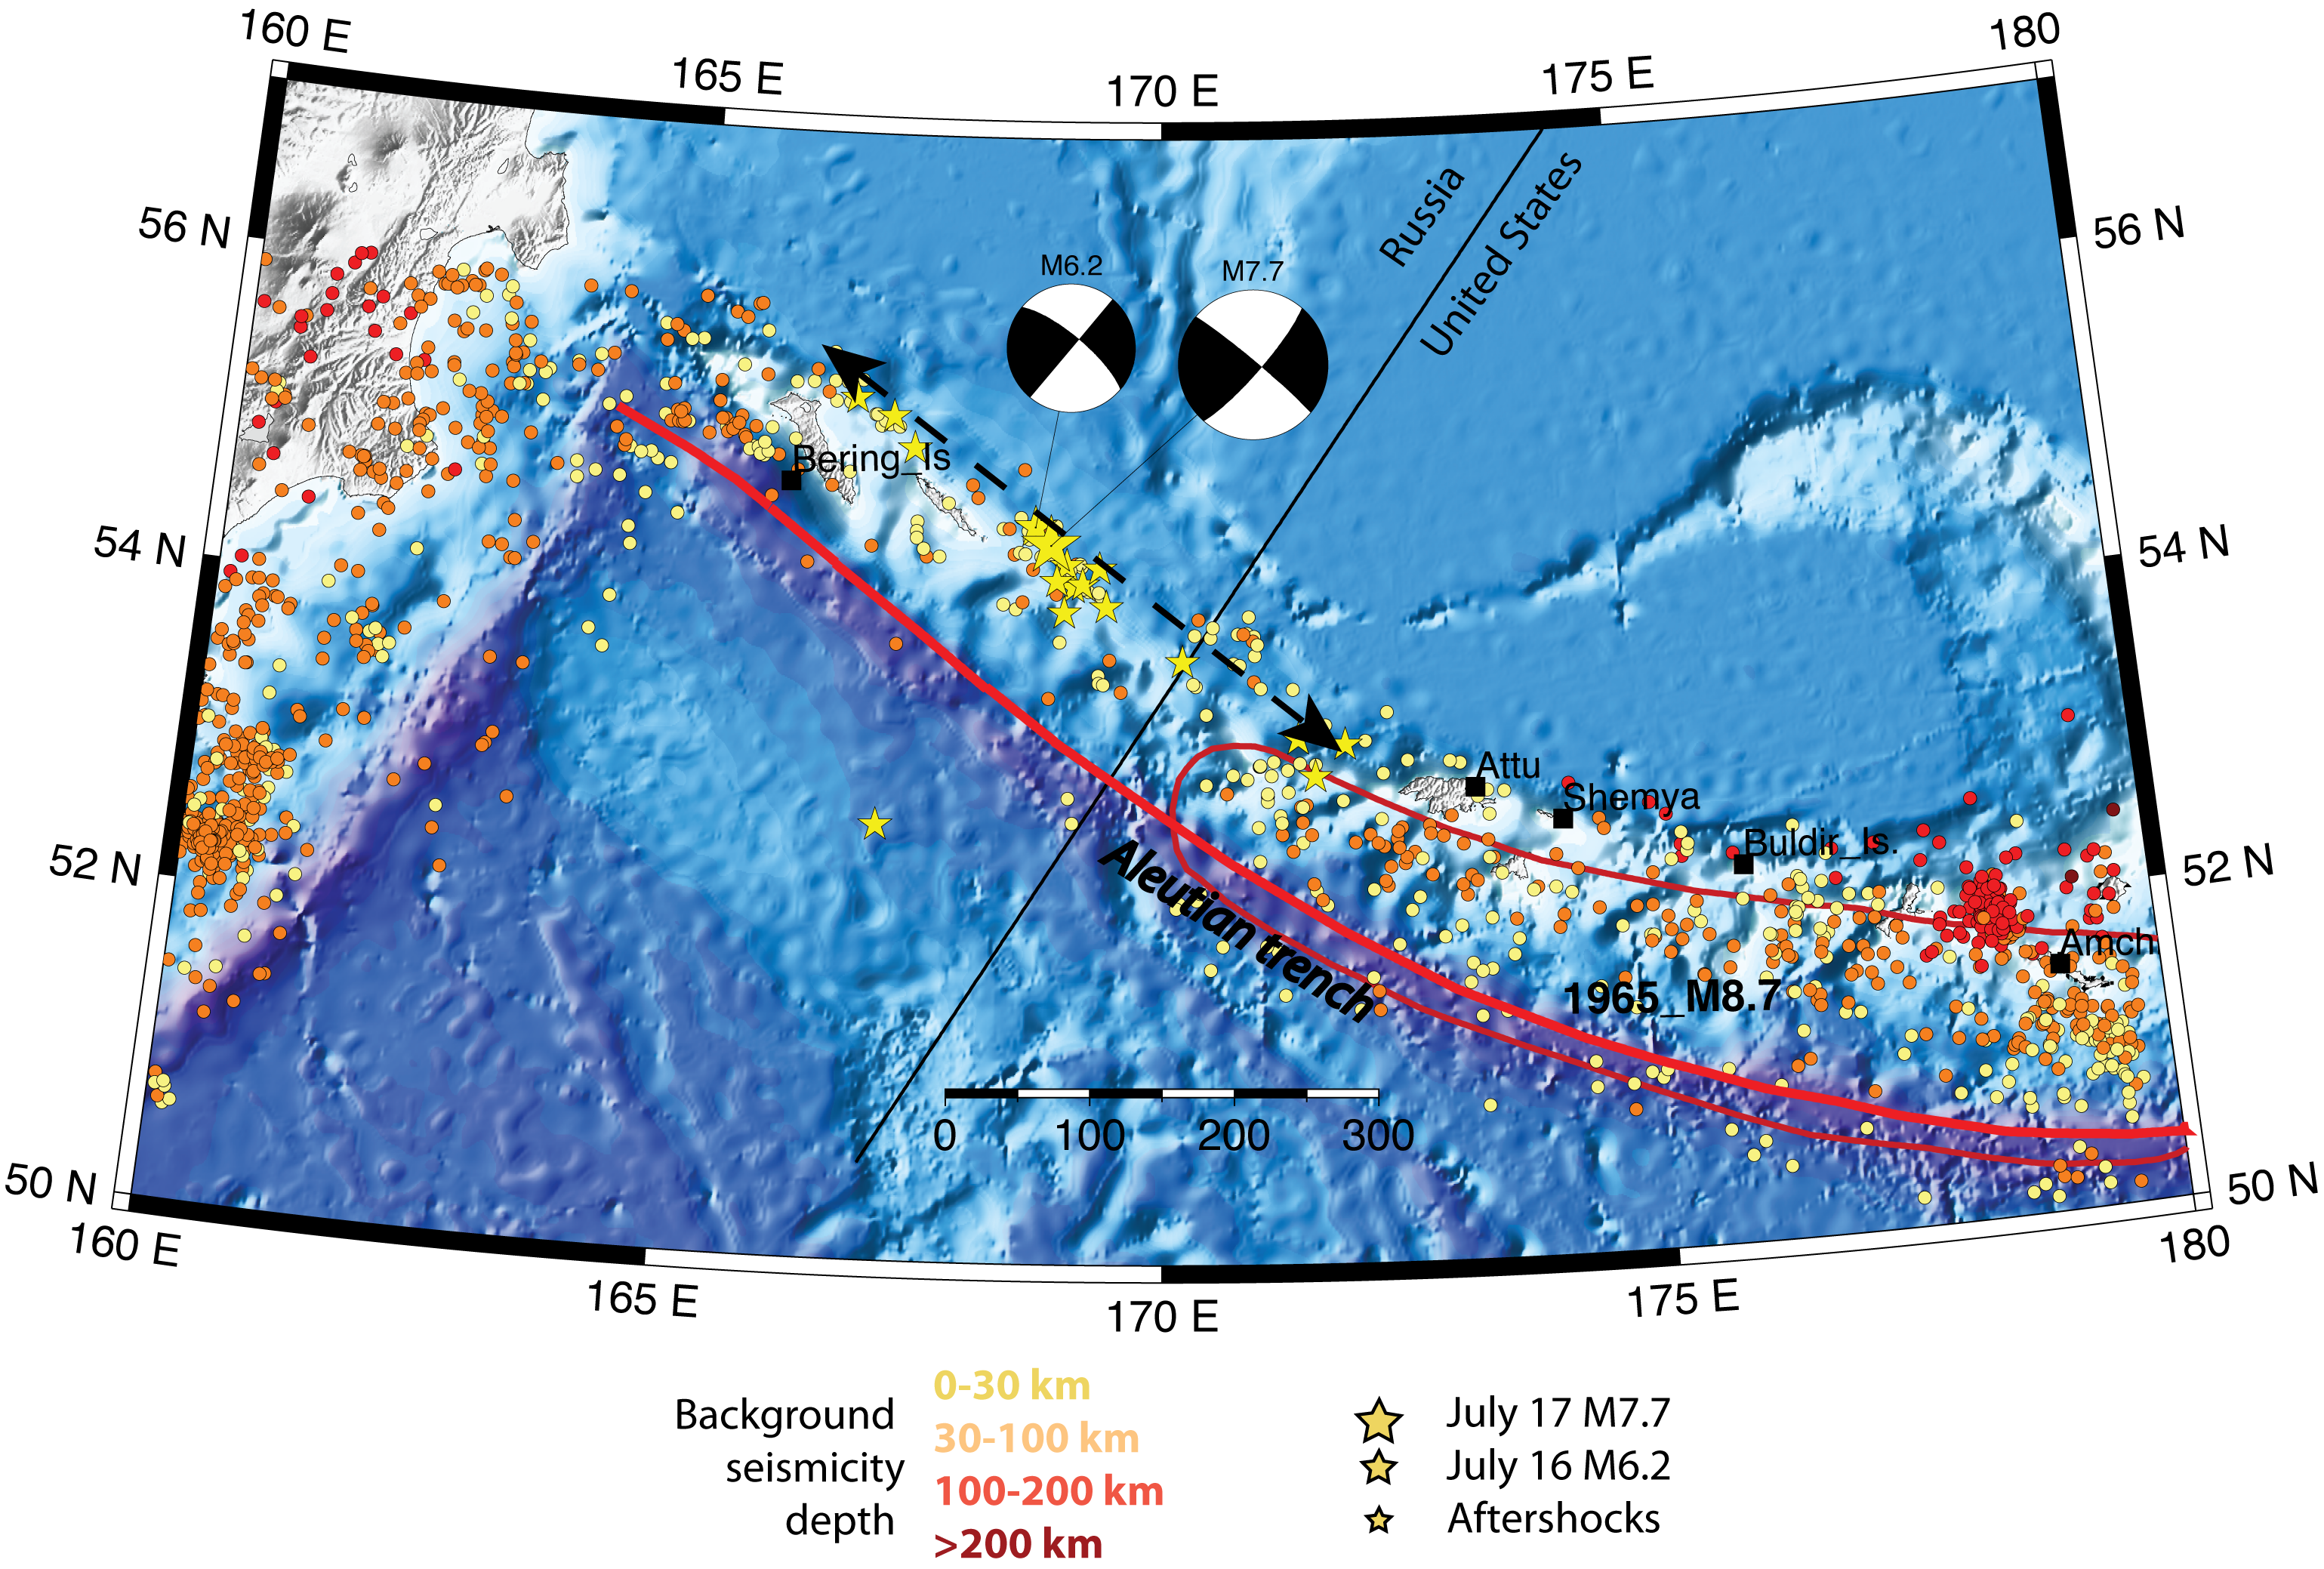 illustrates regional setting of the July 17, 2017 M7.7 earthquake